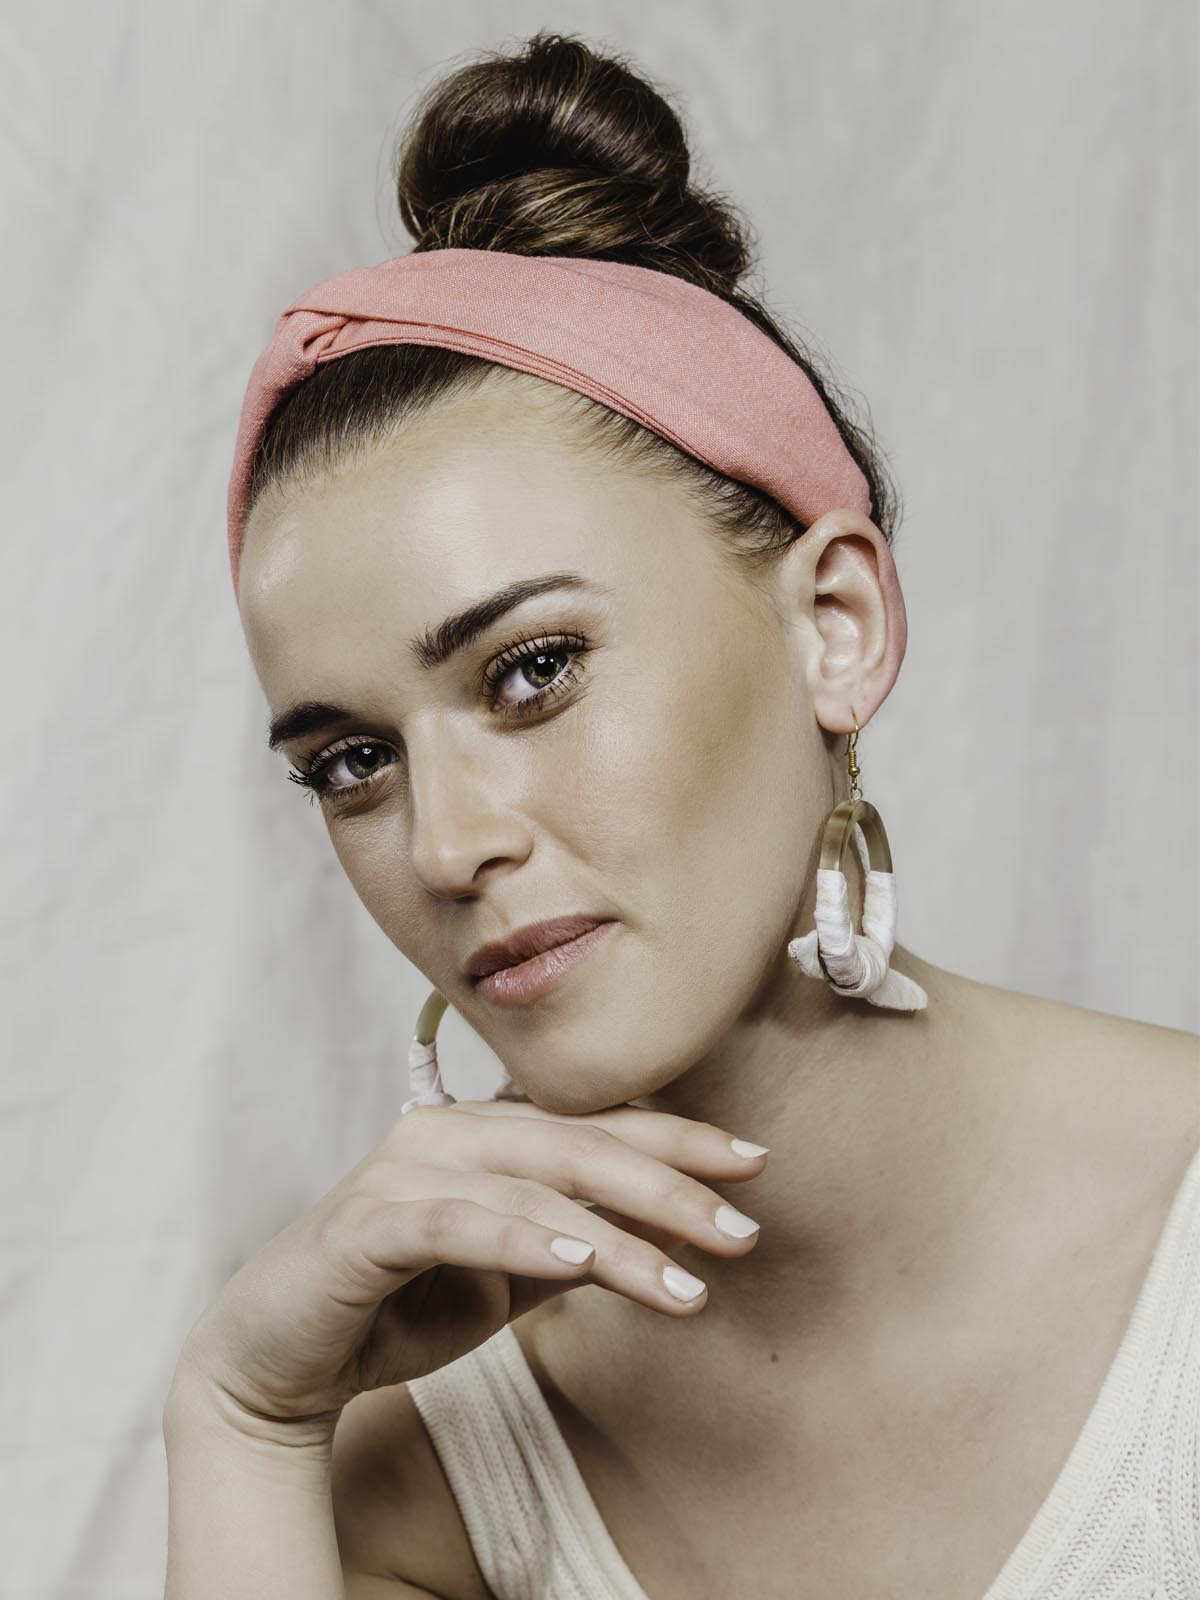 Model wearing coral pink cloth headband.